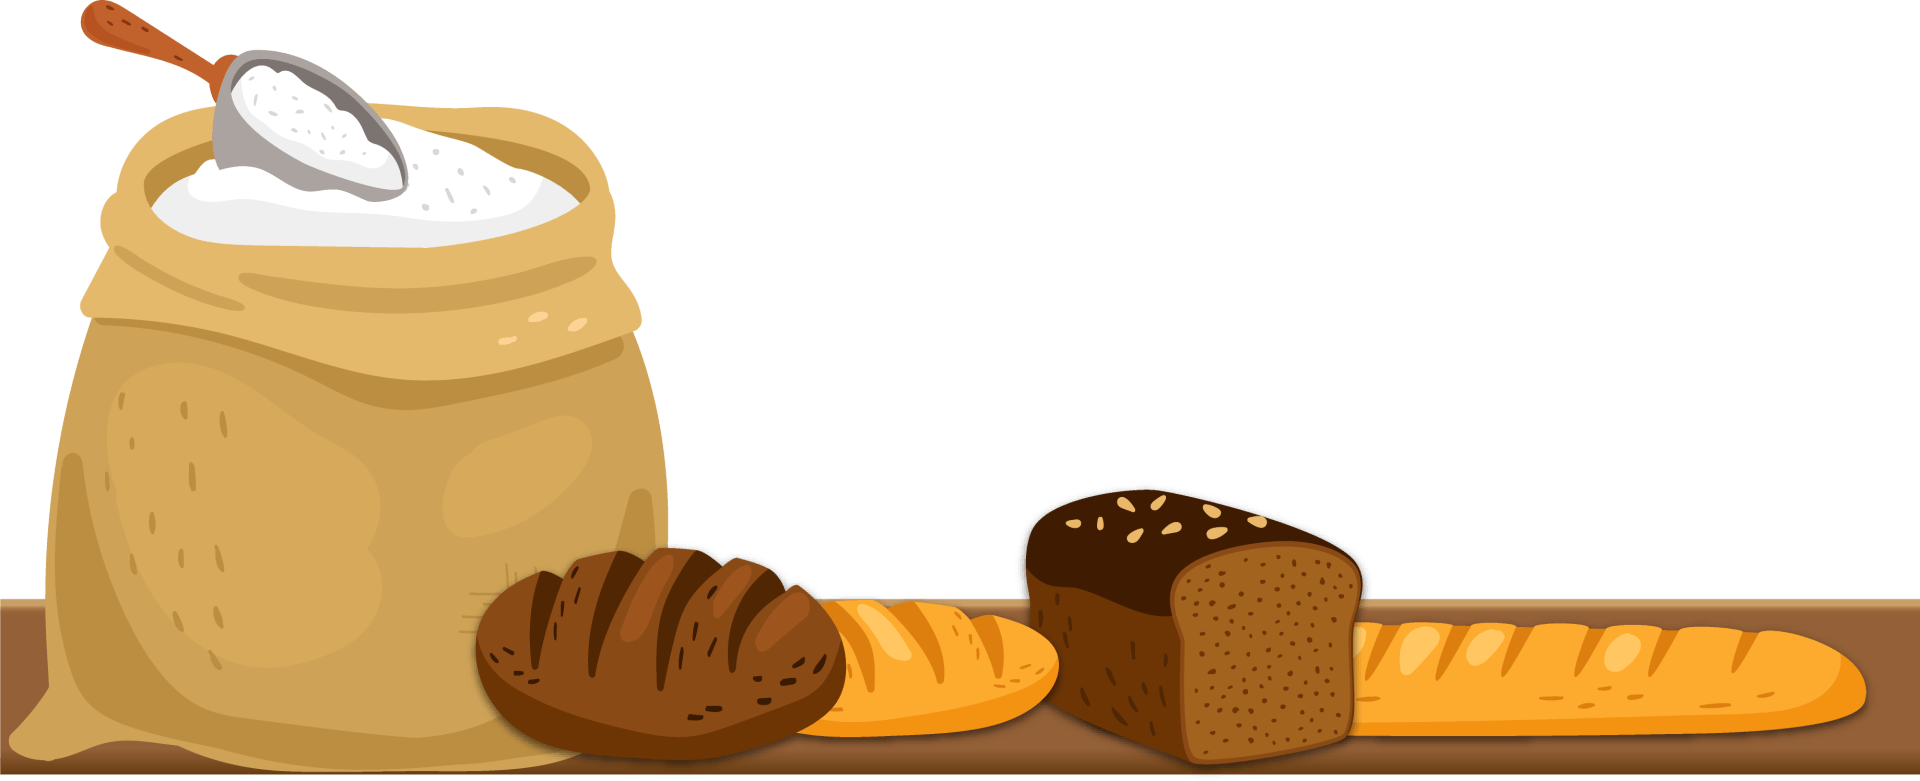 bake with spent grain bread